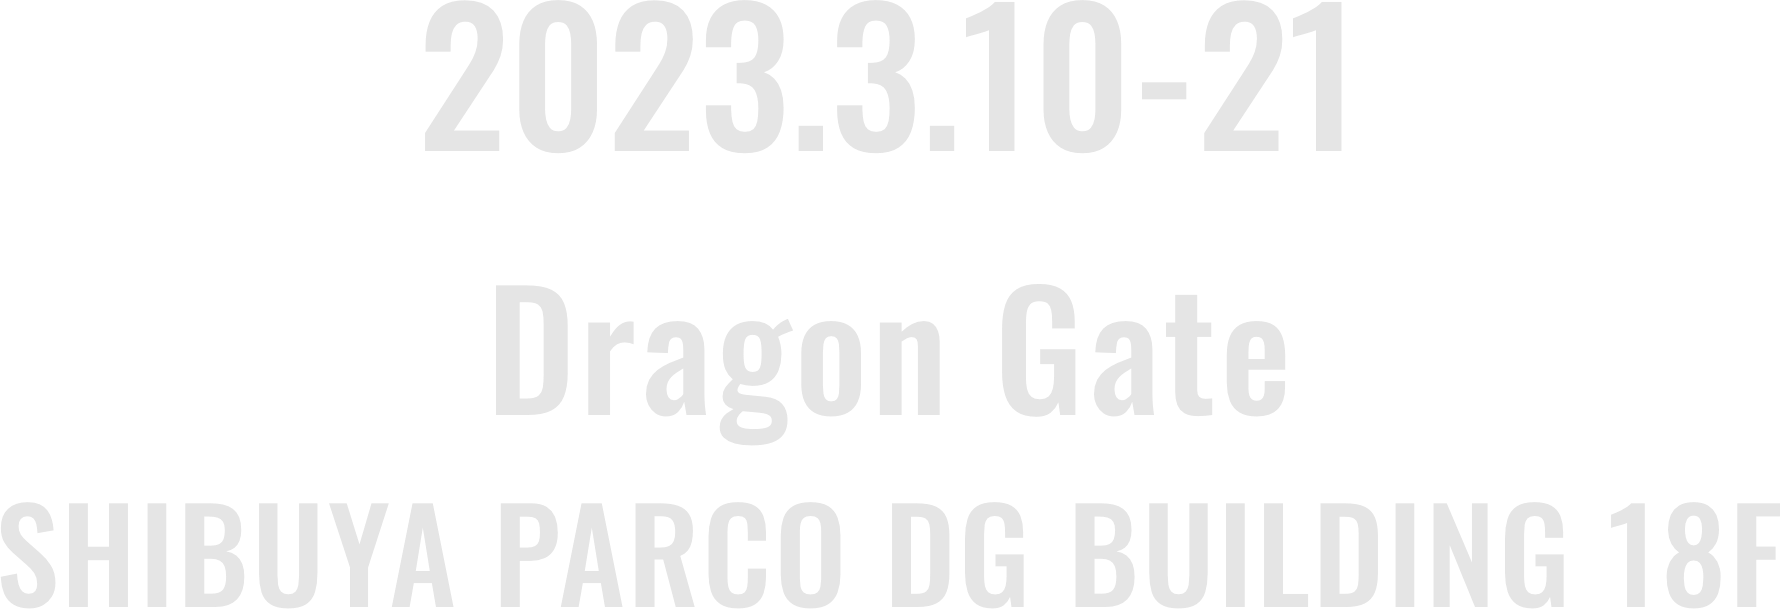 2023.3.10-21 Dragon Gate SHIBUYA PARCO DG BUILDING 18F